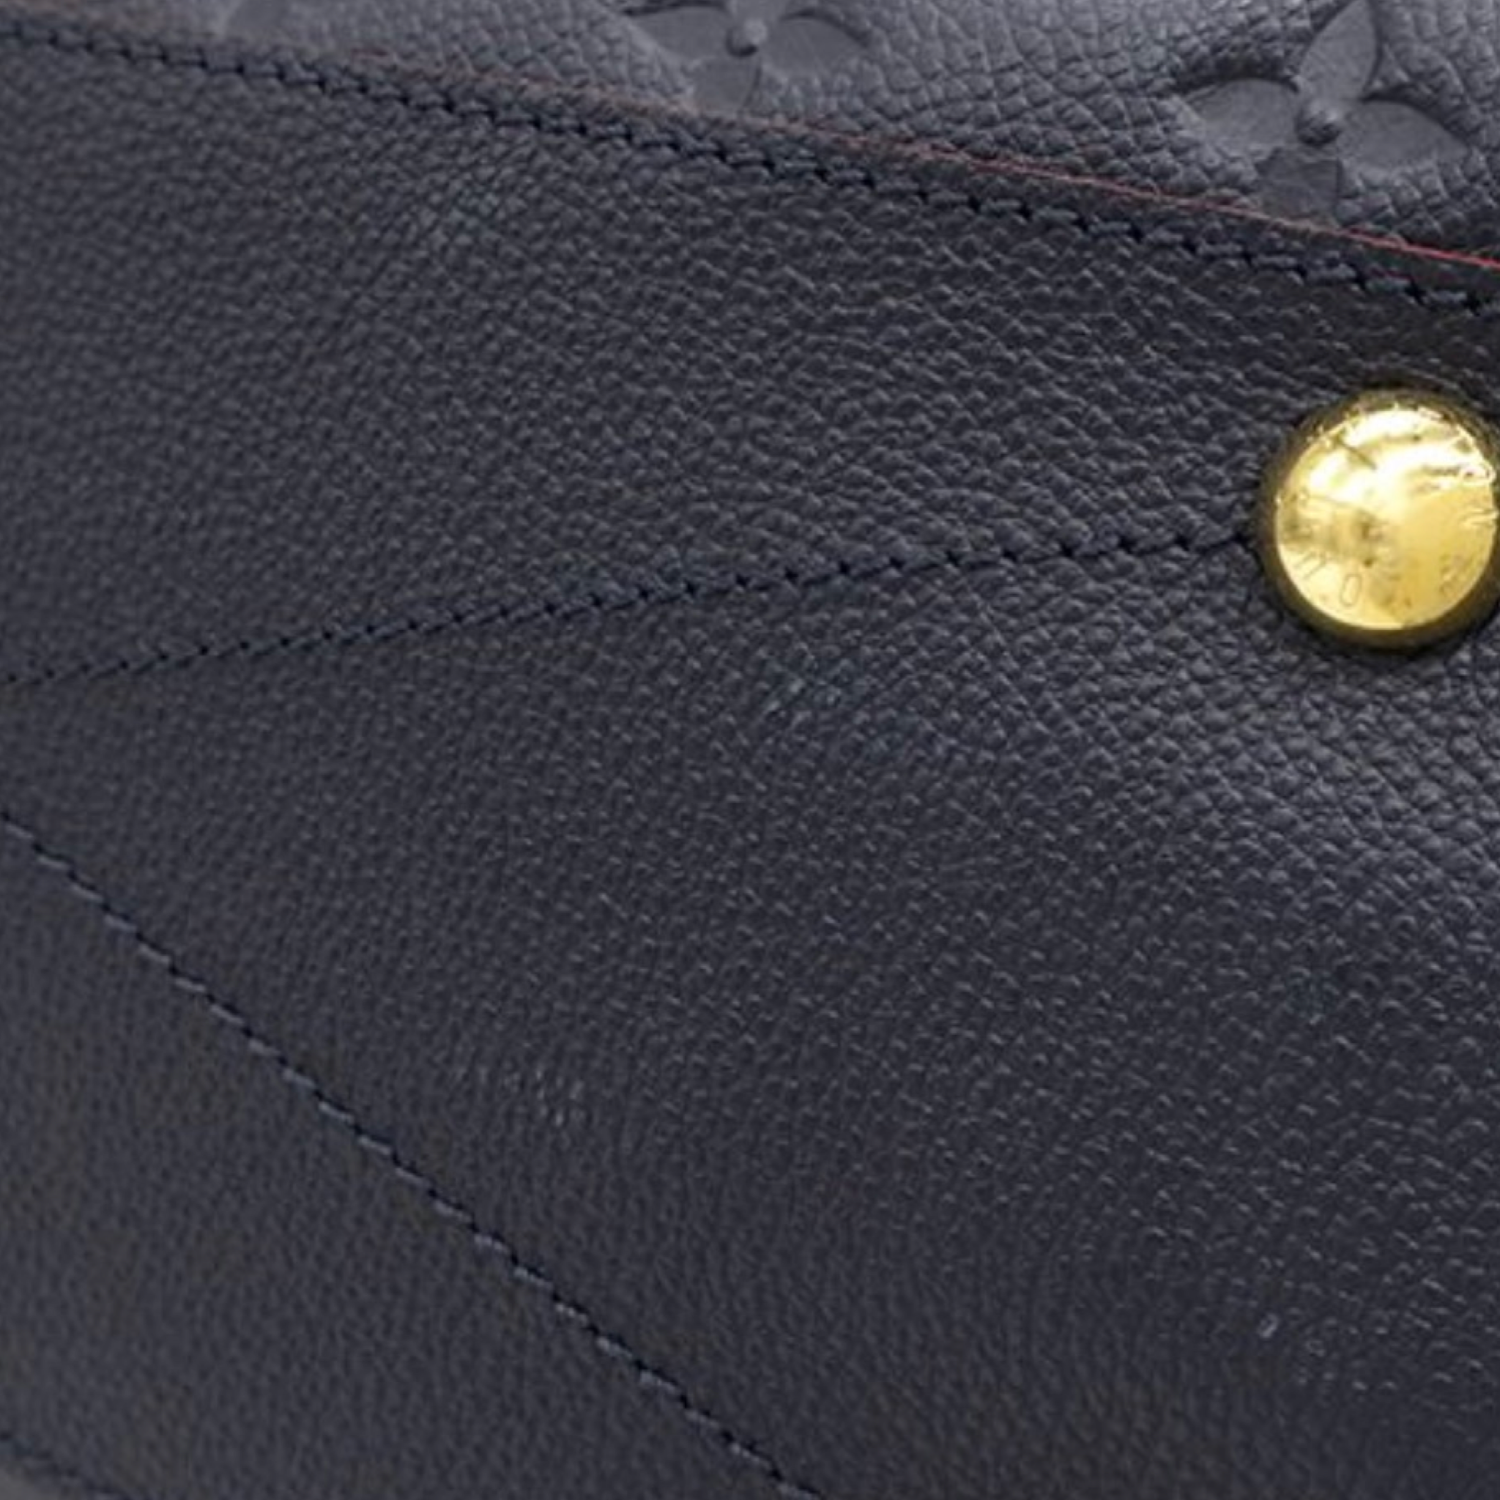 Louis Vuitton pre-owned Monogram Montaigne MM two-way Handbag